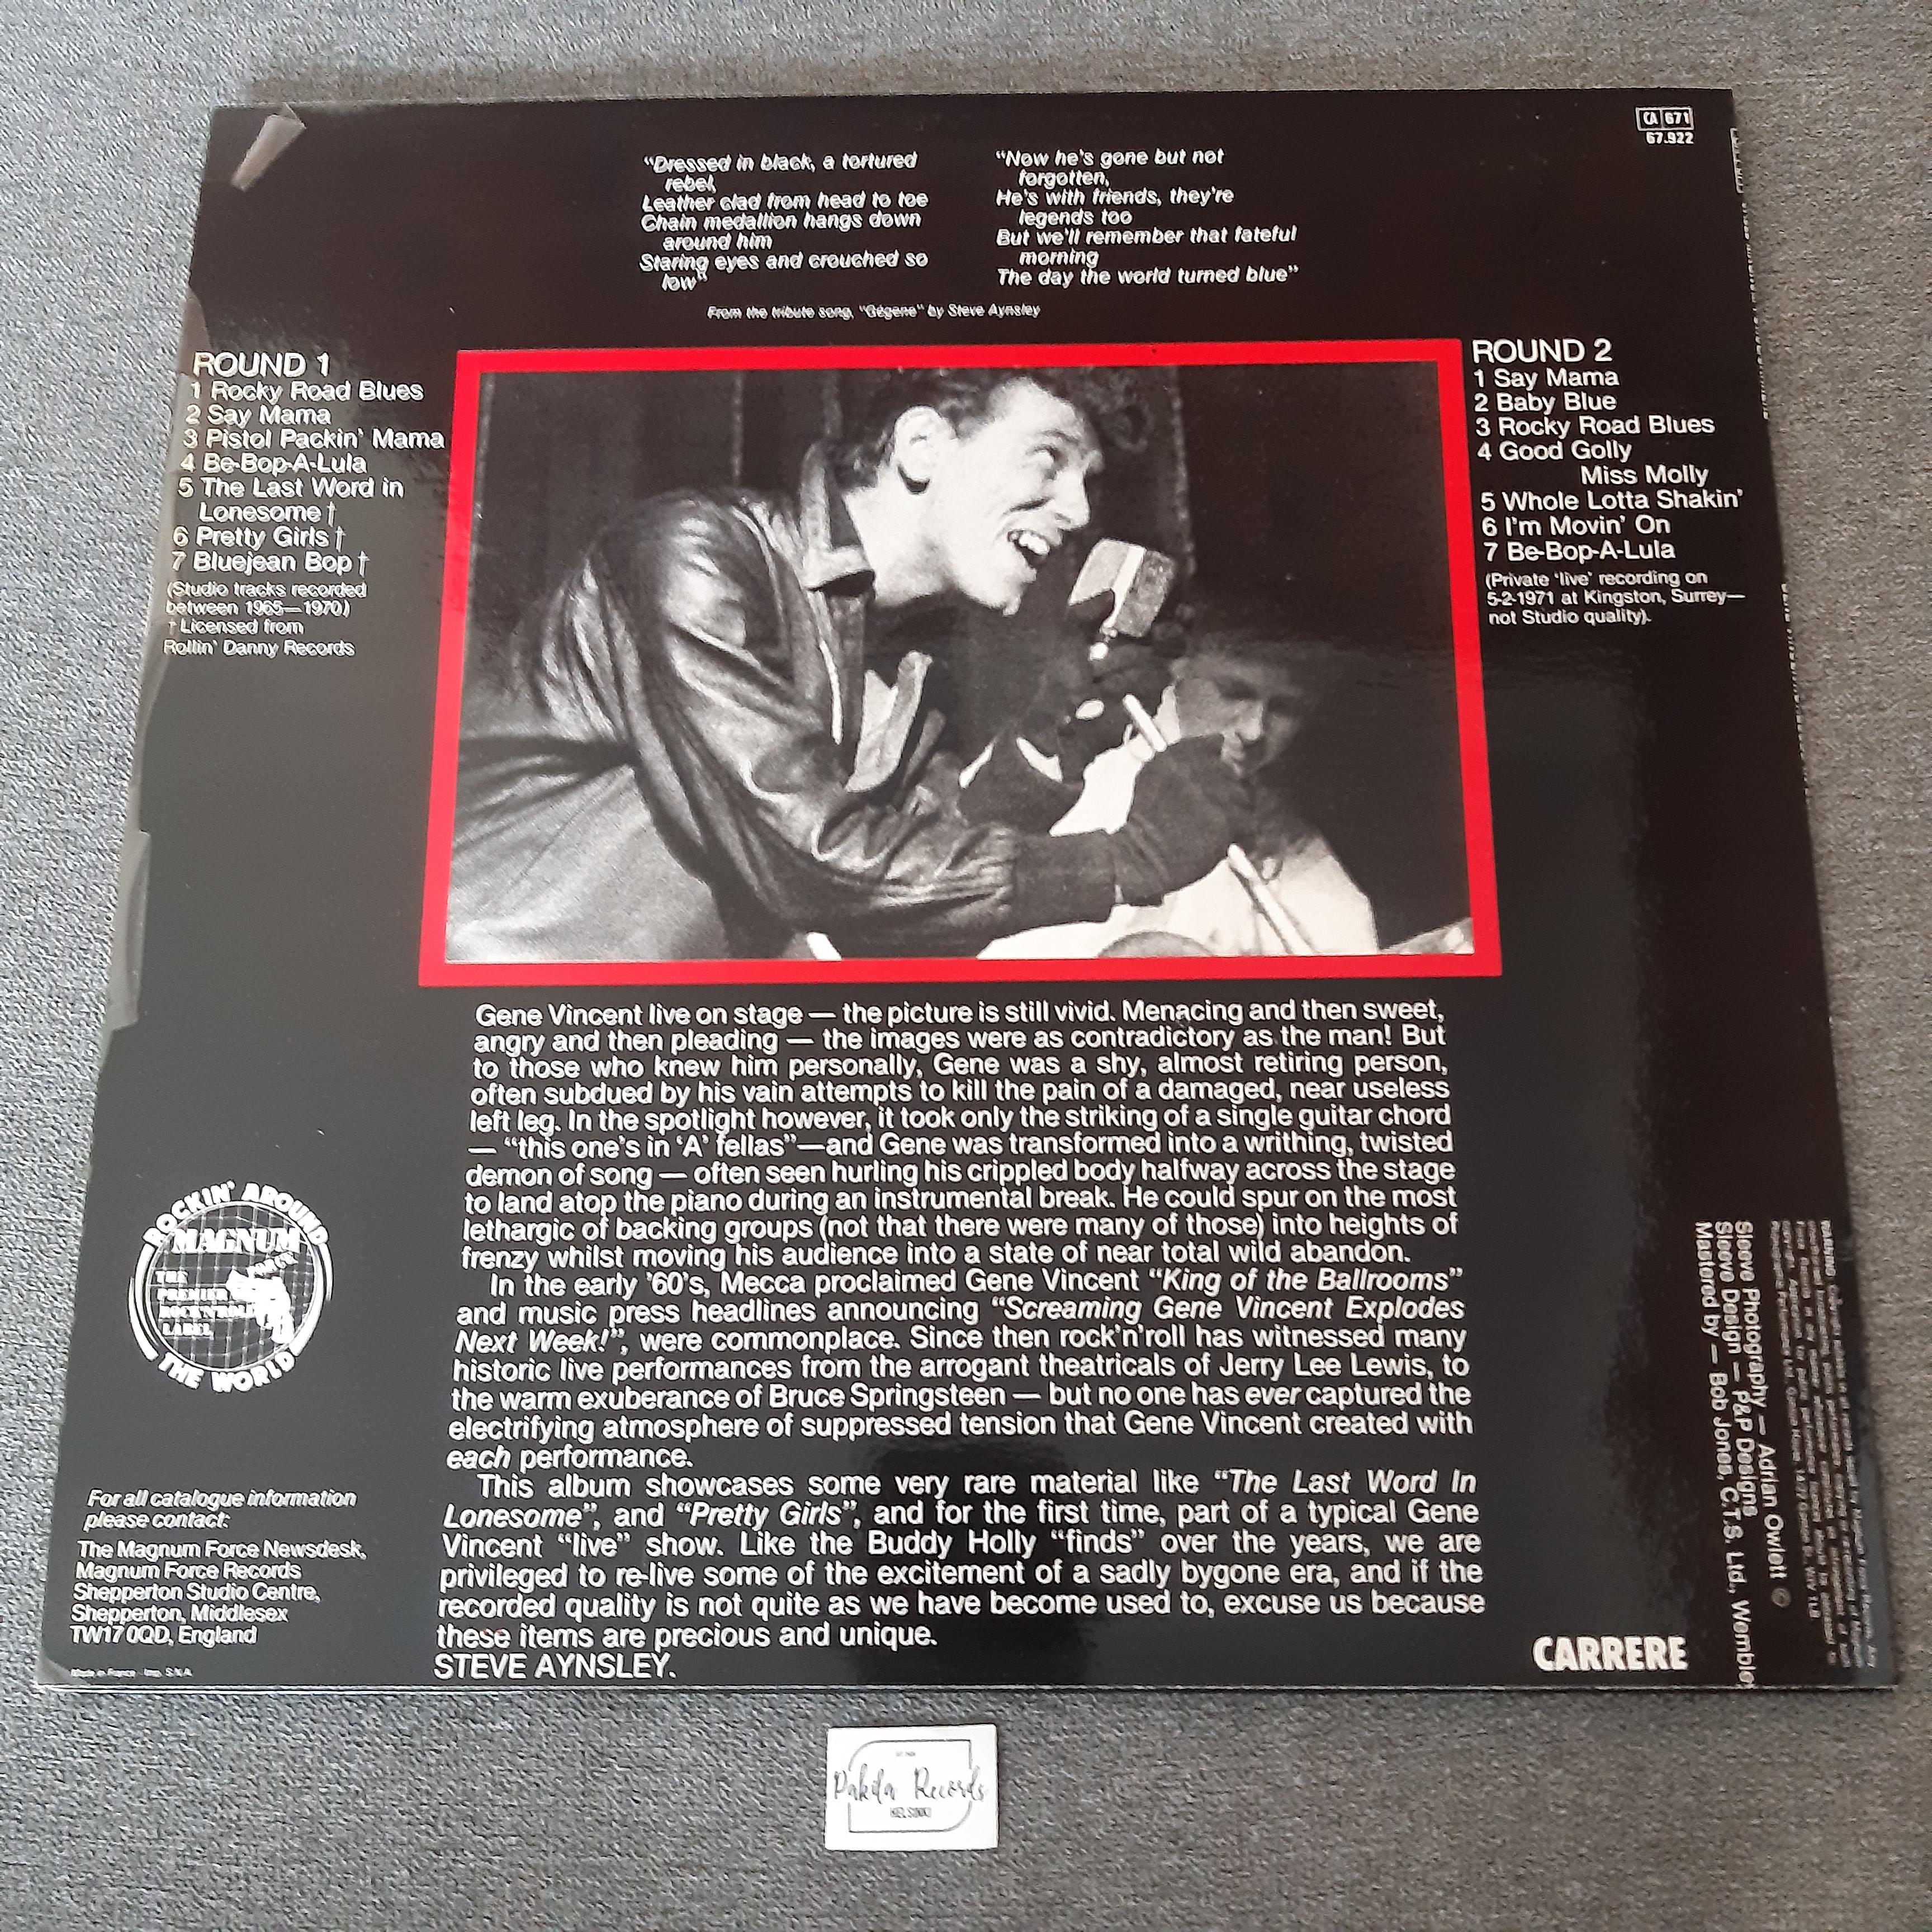 Gene Vincent - Dressed In Black - LP (käytetty)